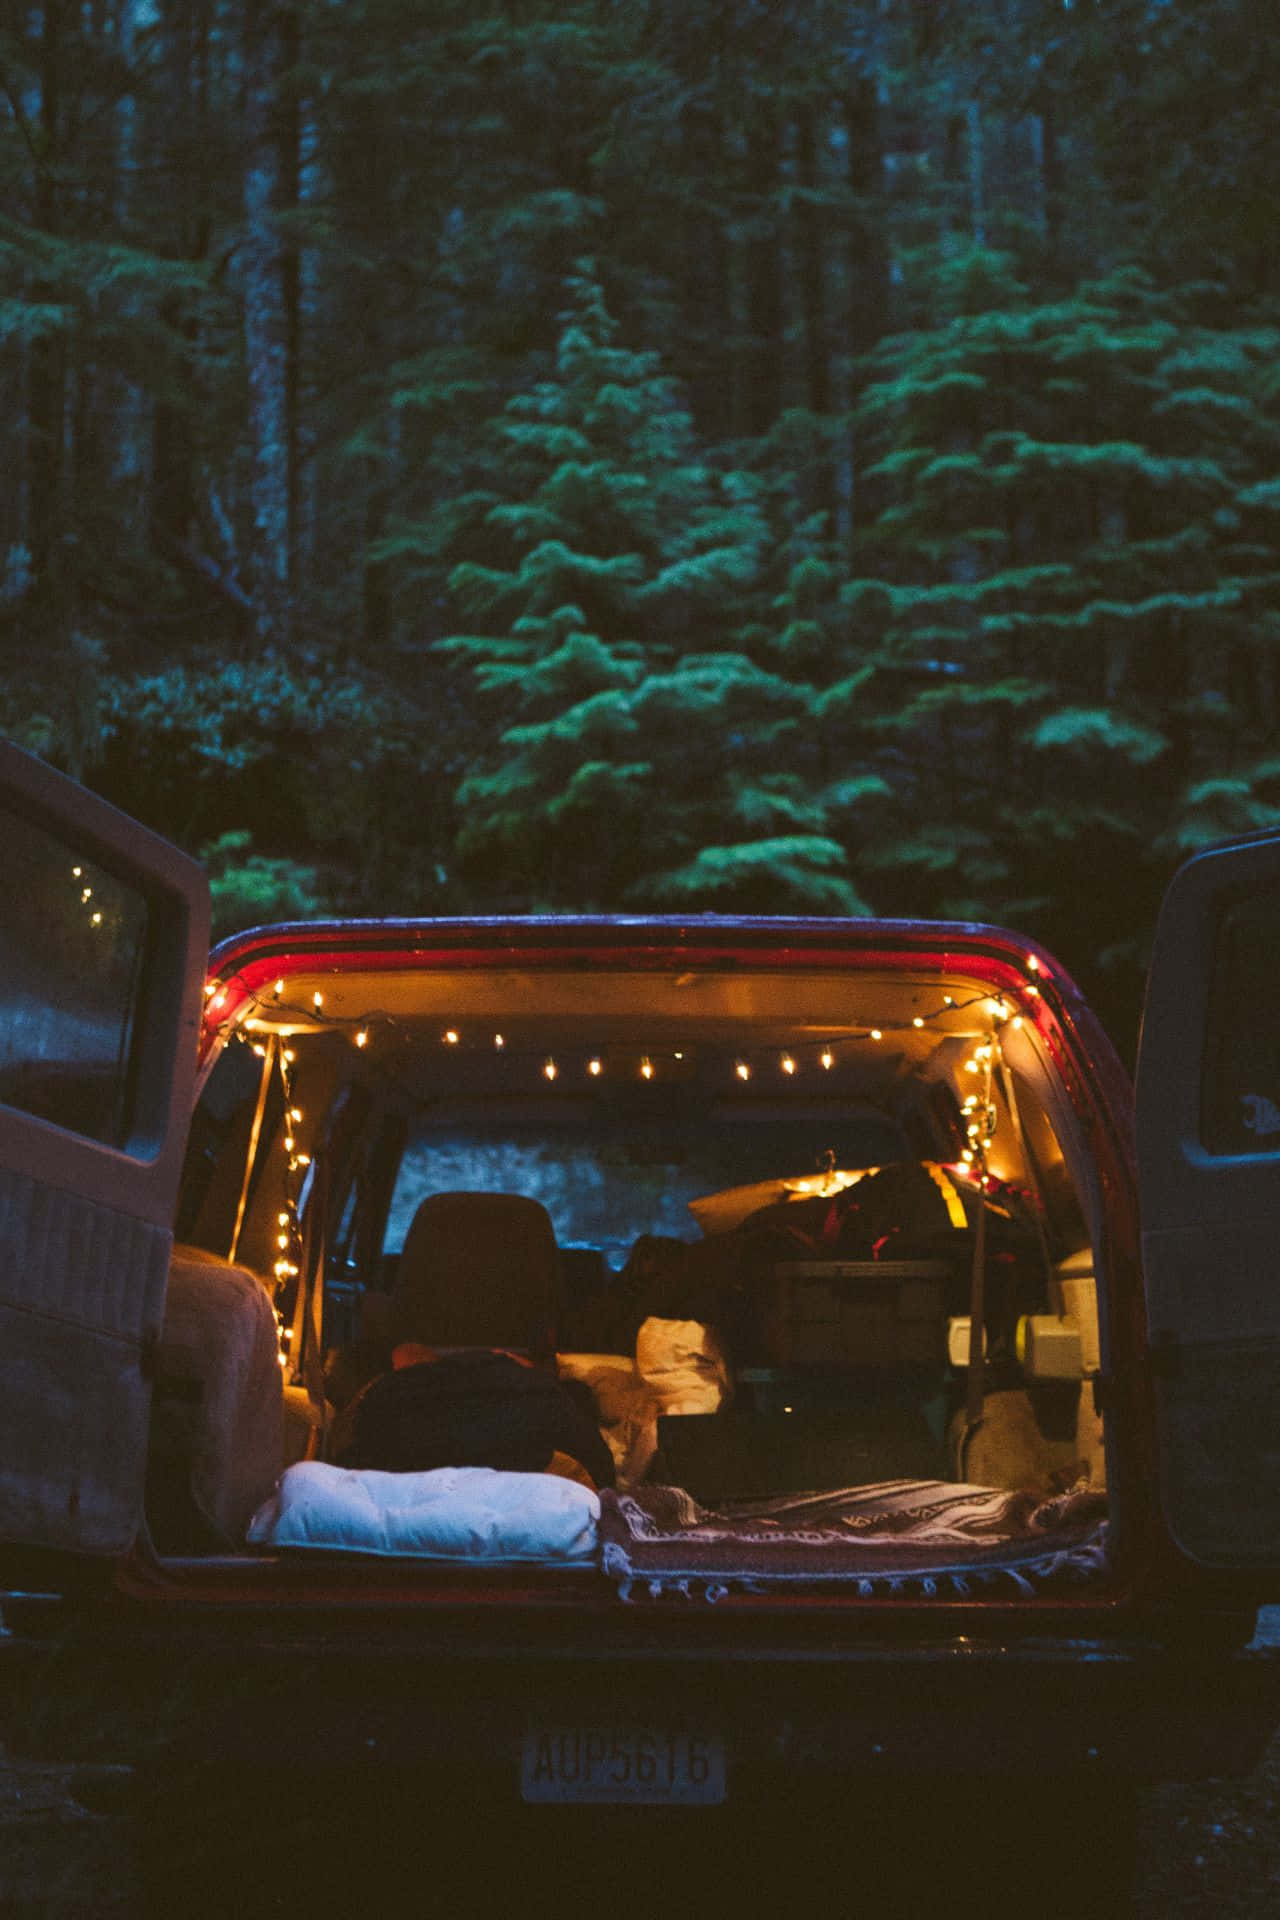 Caption: A cozy campsite in a snowy winter wonderland. Wallpaper